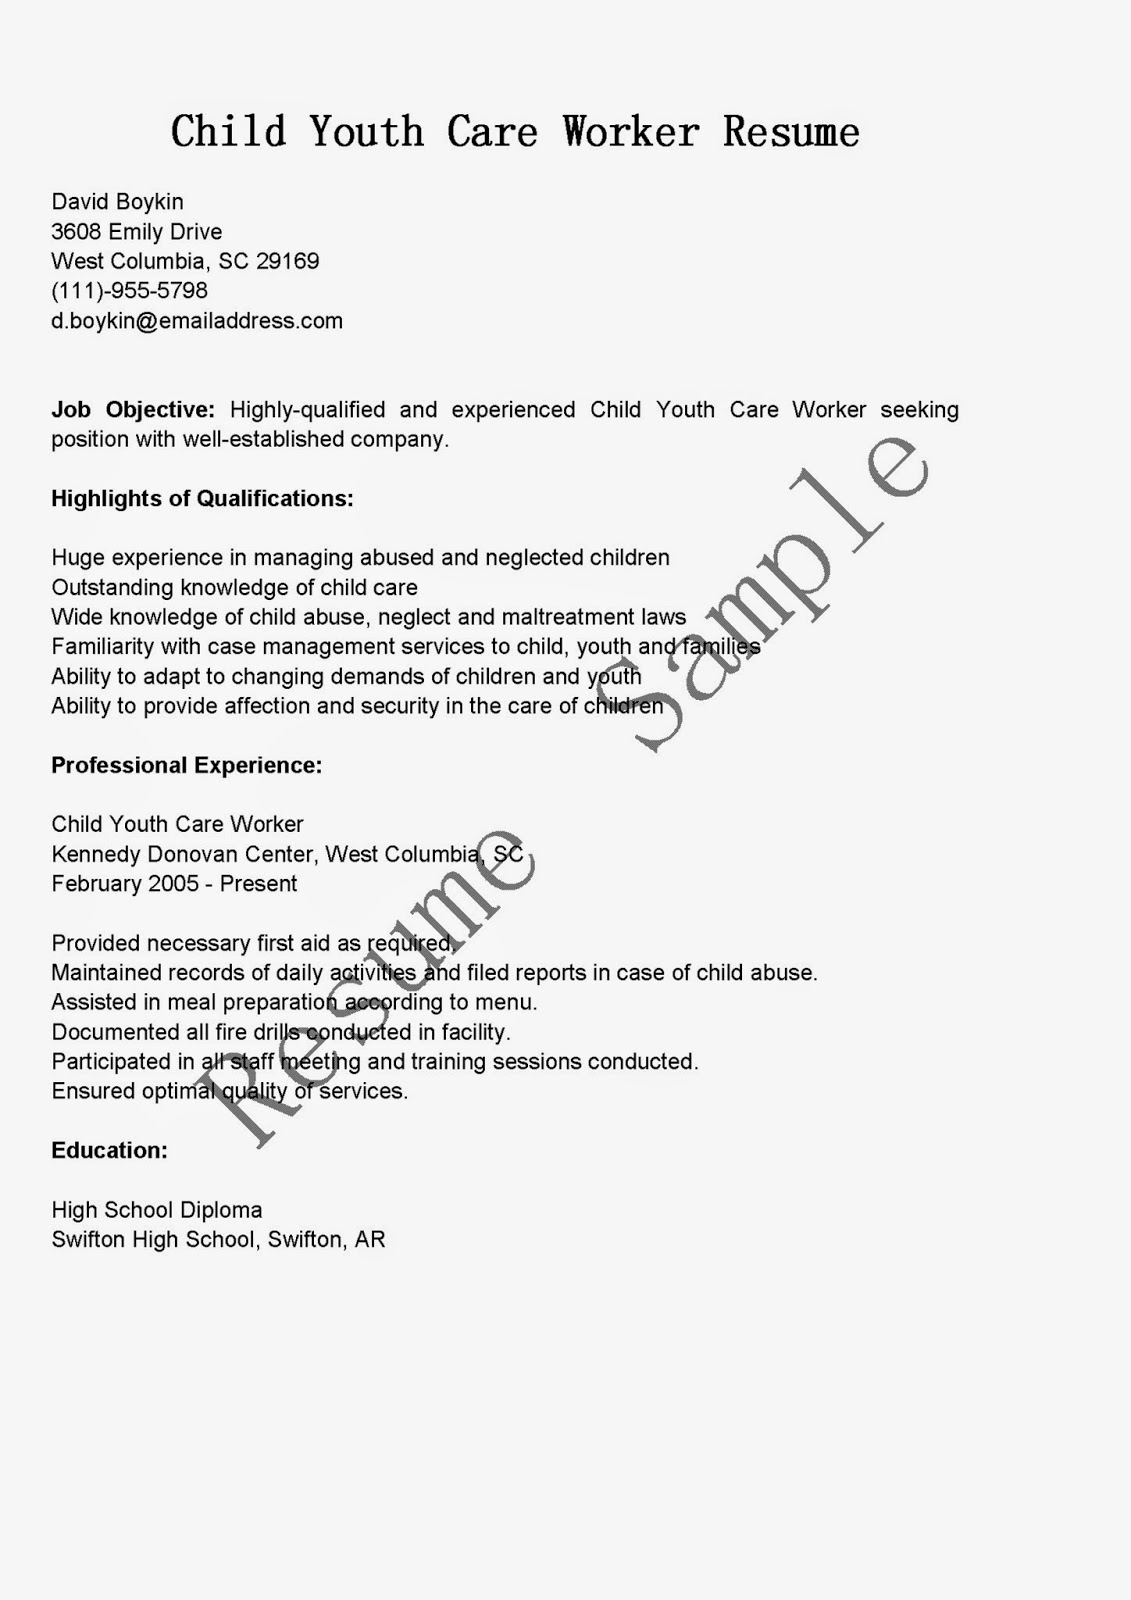 Sample of communication skills on resume